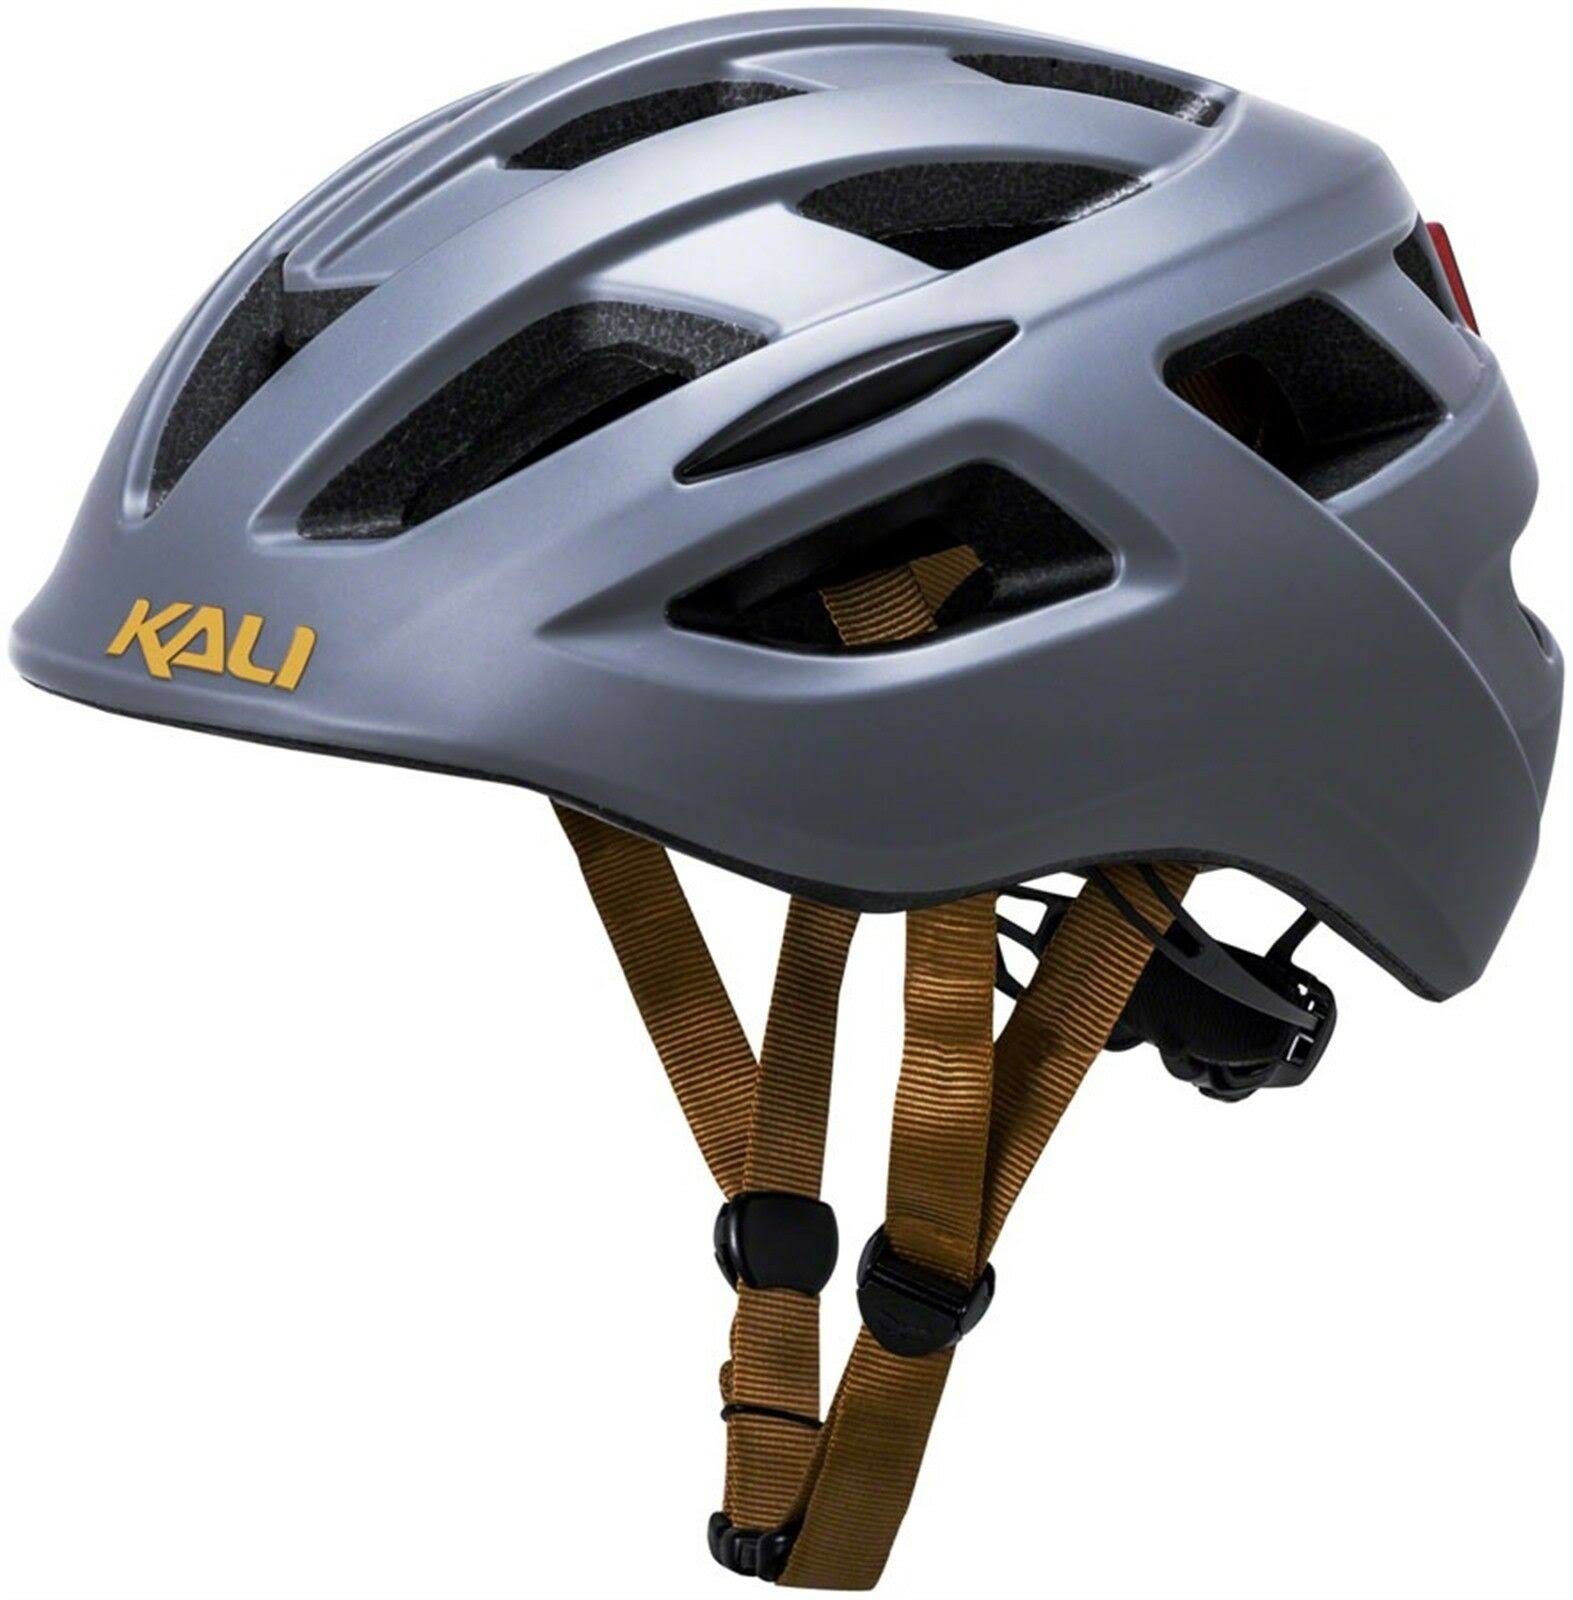 Kali Protectives Central Bike Helmet - Matte Gray, Small and Medium